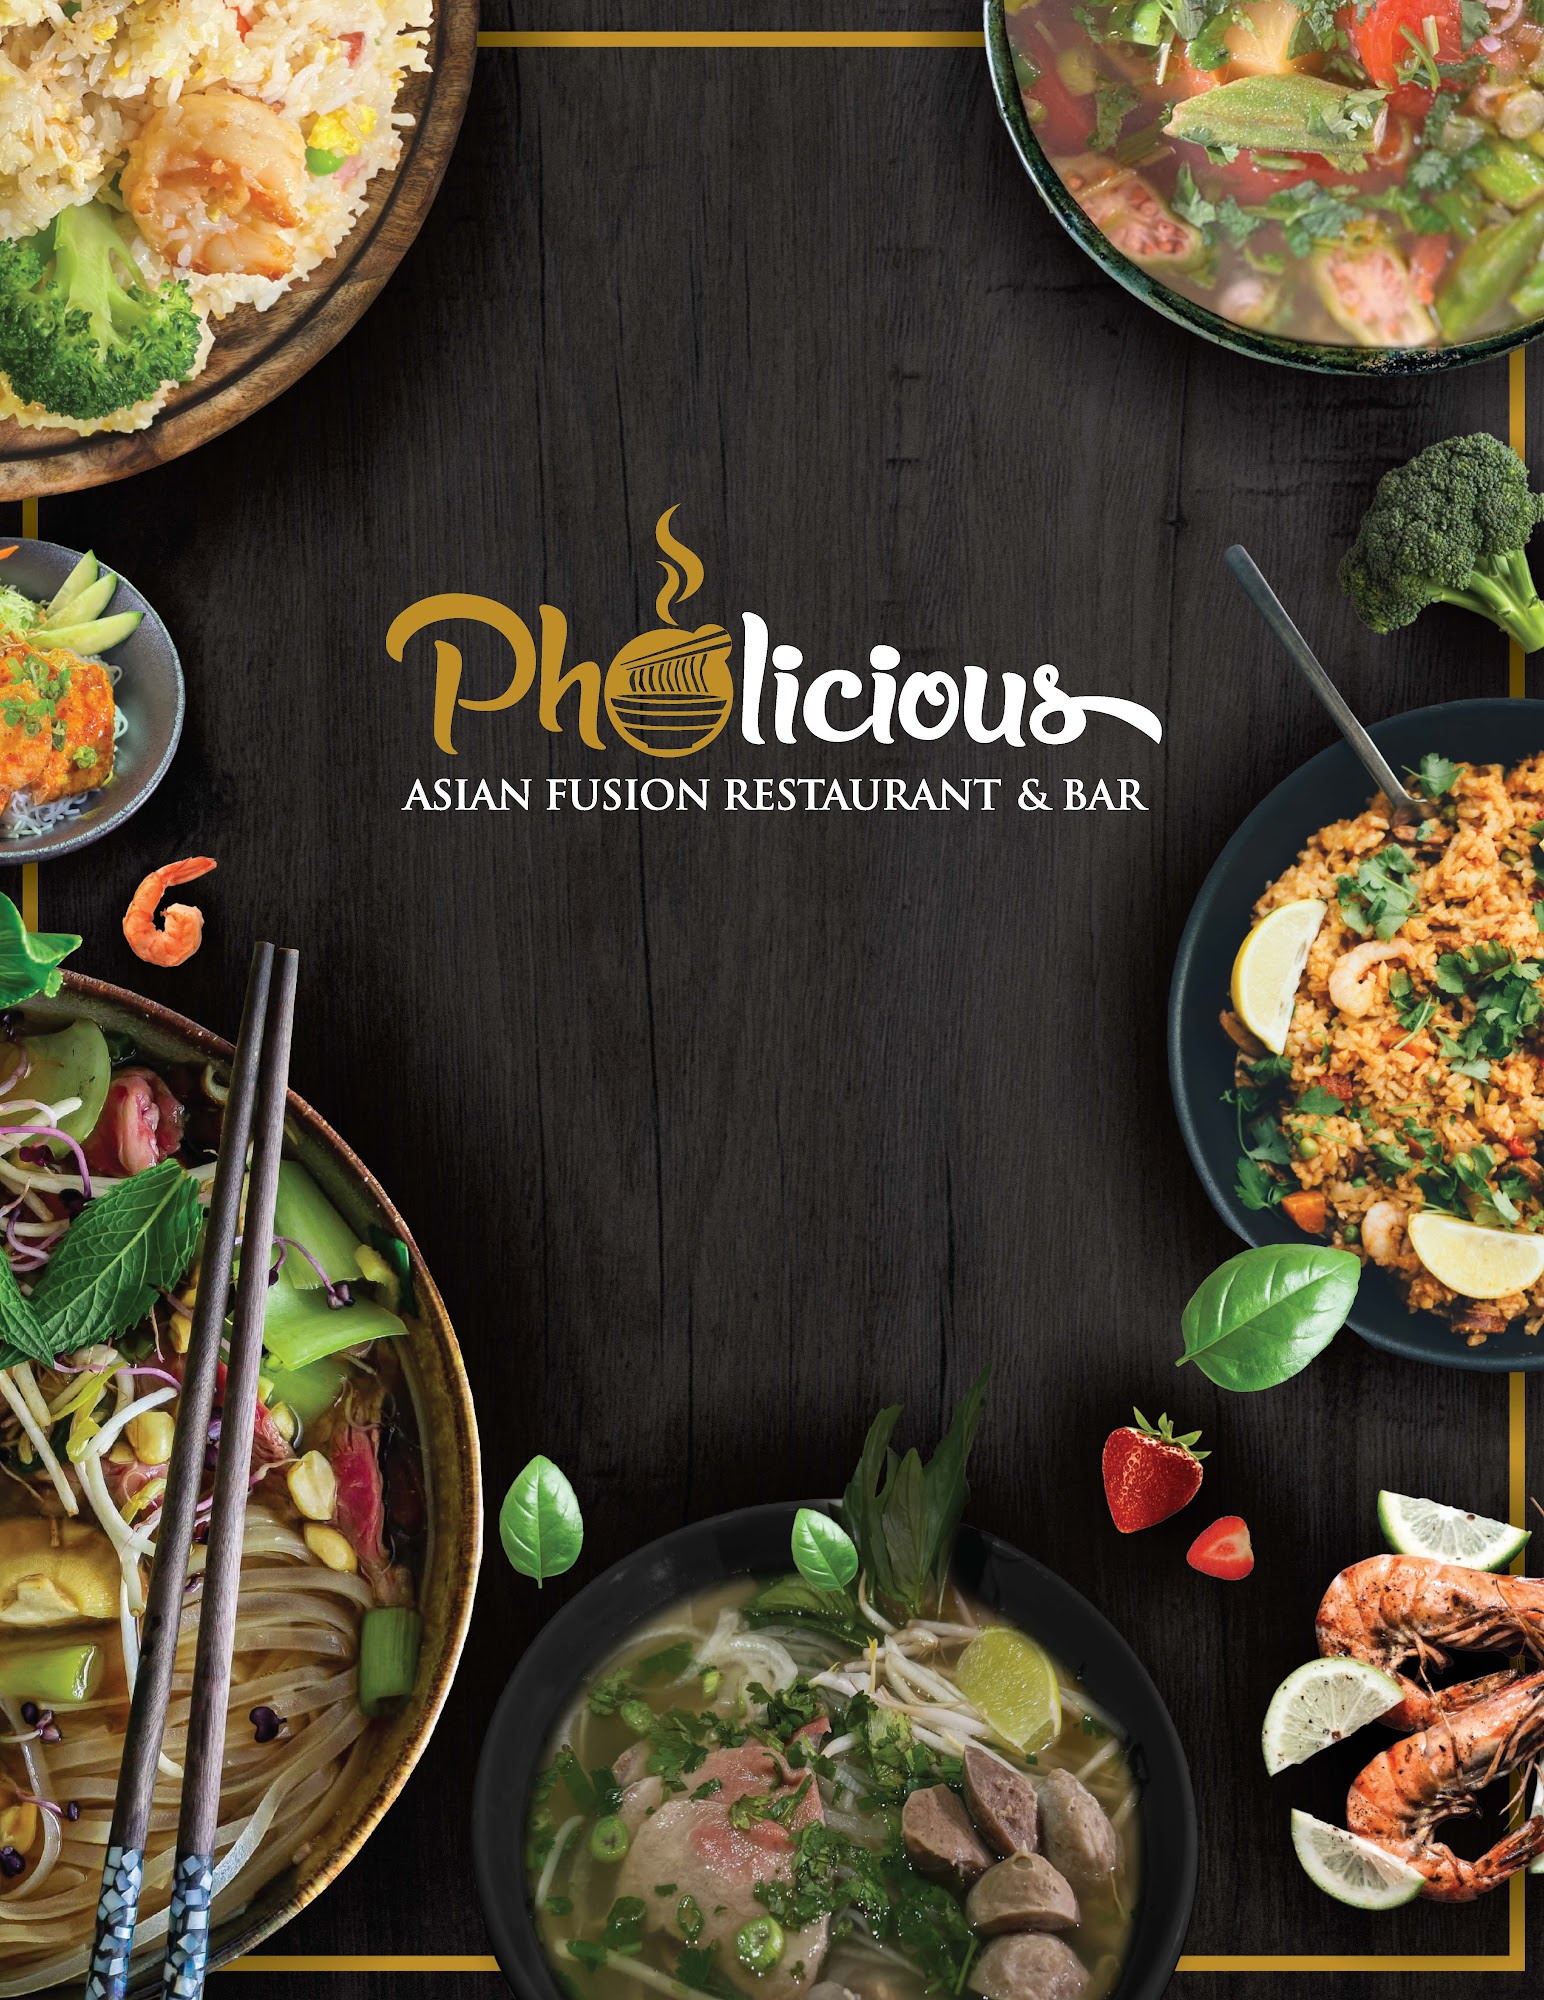 Pholicious Asian Fusion Restaurant & Bar